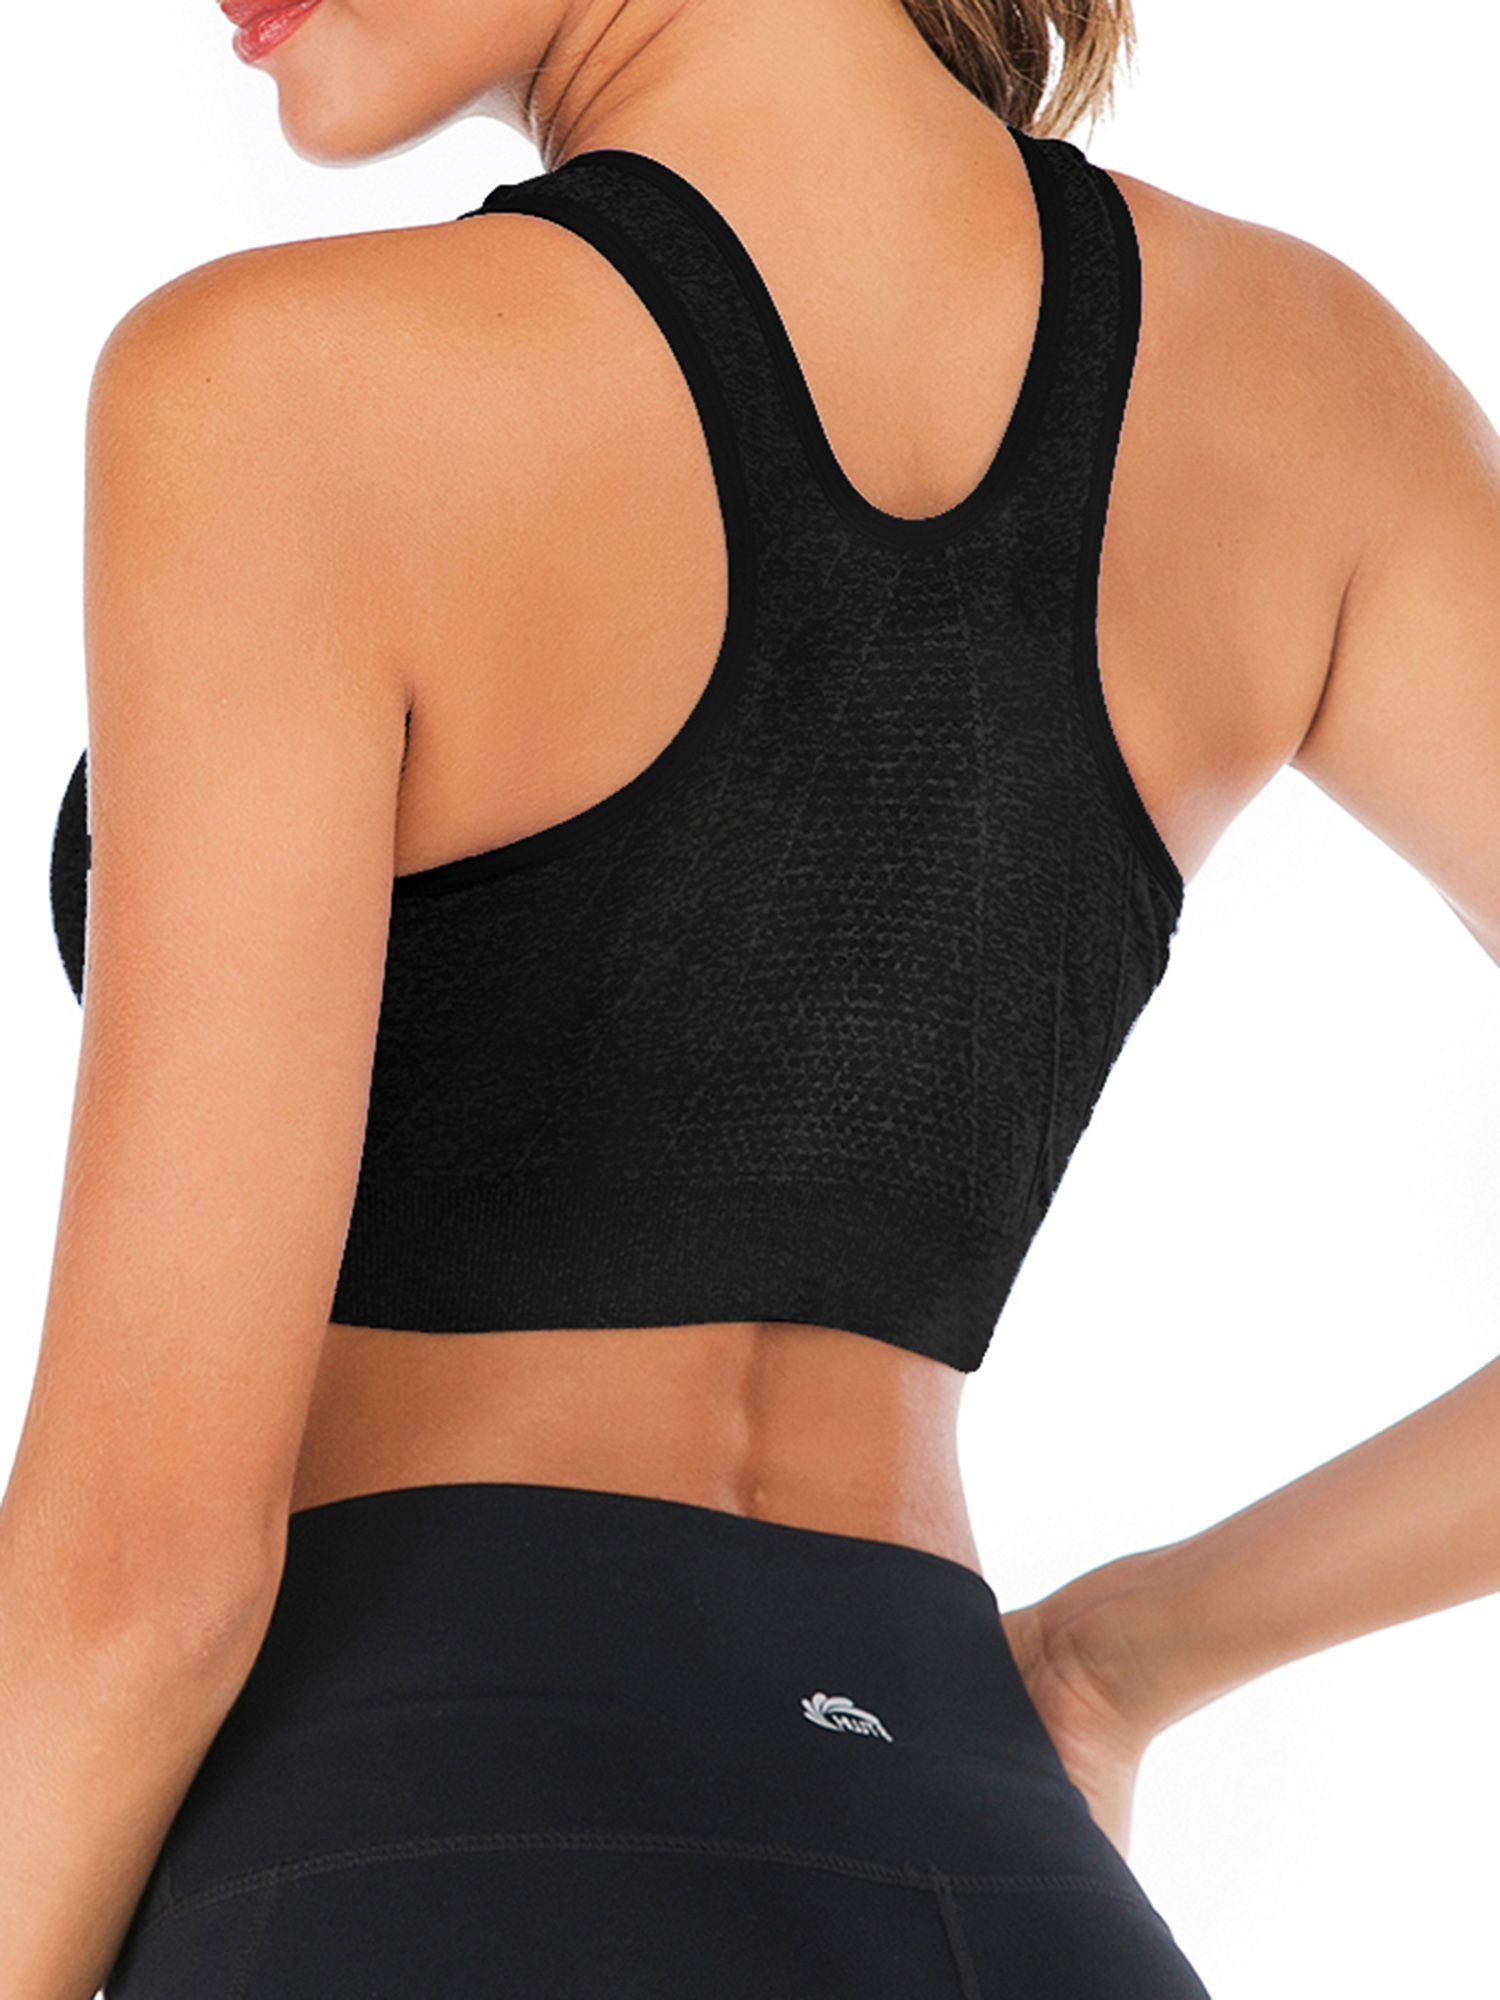 FUTATA Womens Post Op Bras Racerback Sports Bras Comfort High Impact Workout Activewear Tops Zipper Front Close Post-Surgery Bra - image 5 of 7